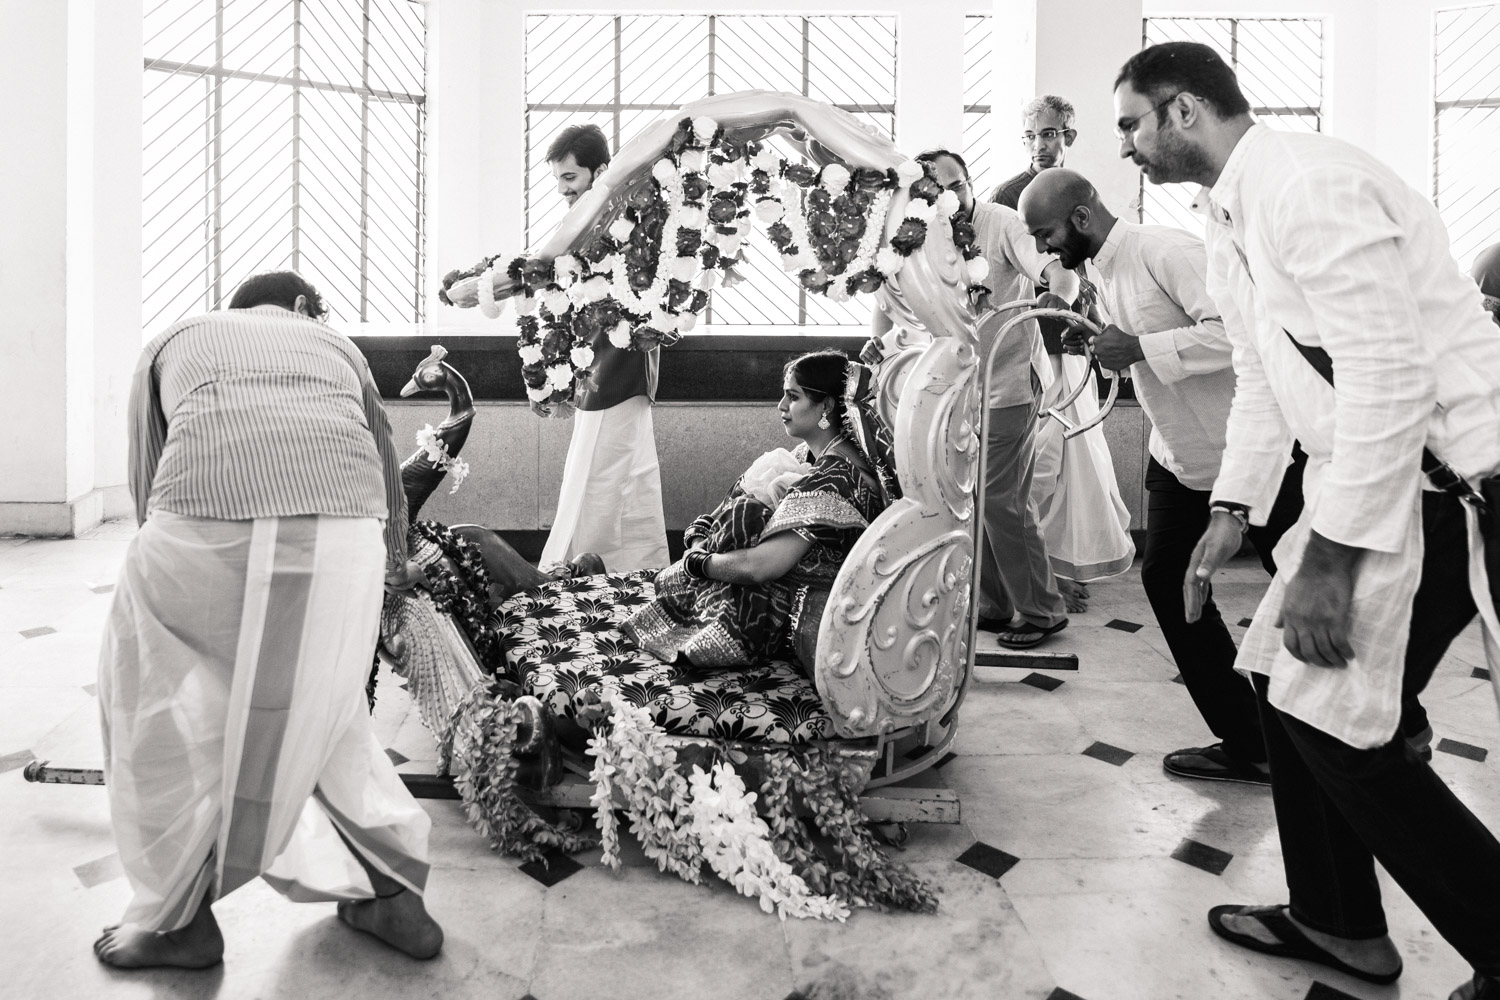 cross cultural tamil wedding in bangalore